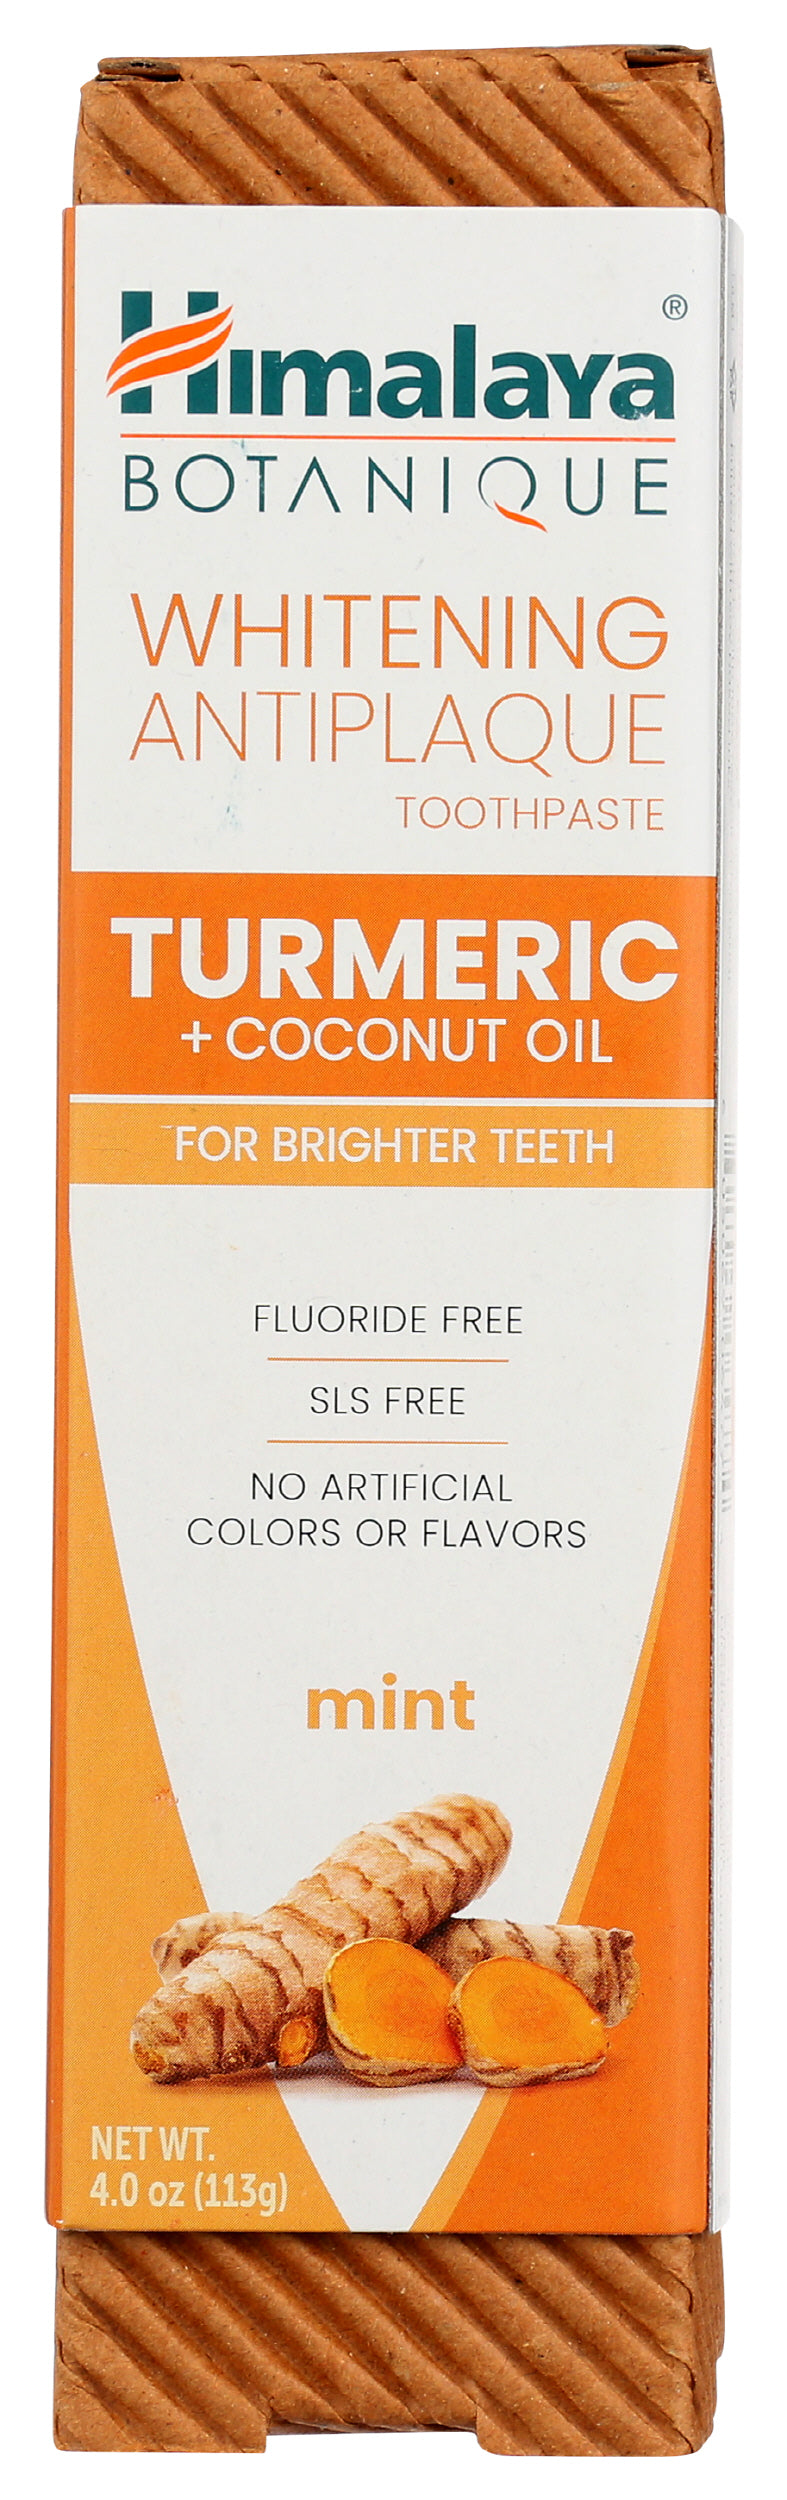 Himalaya Whitening Toothpaste Tumeric + Coconut Oil 4.0 oz